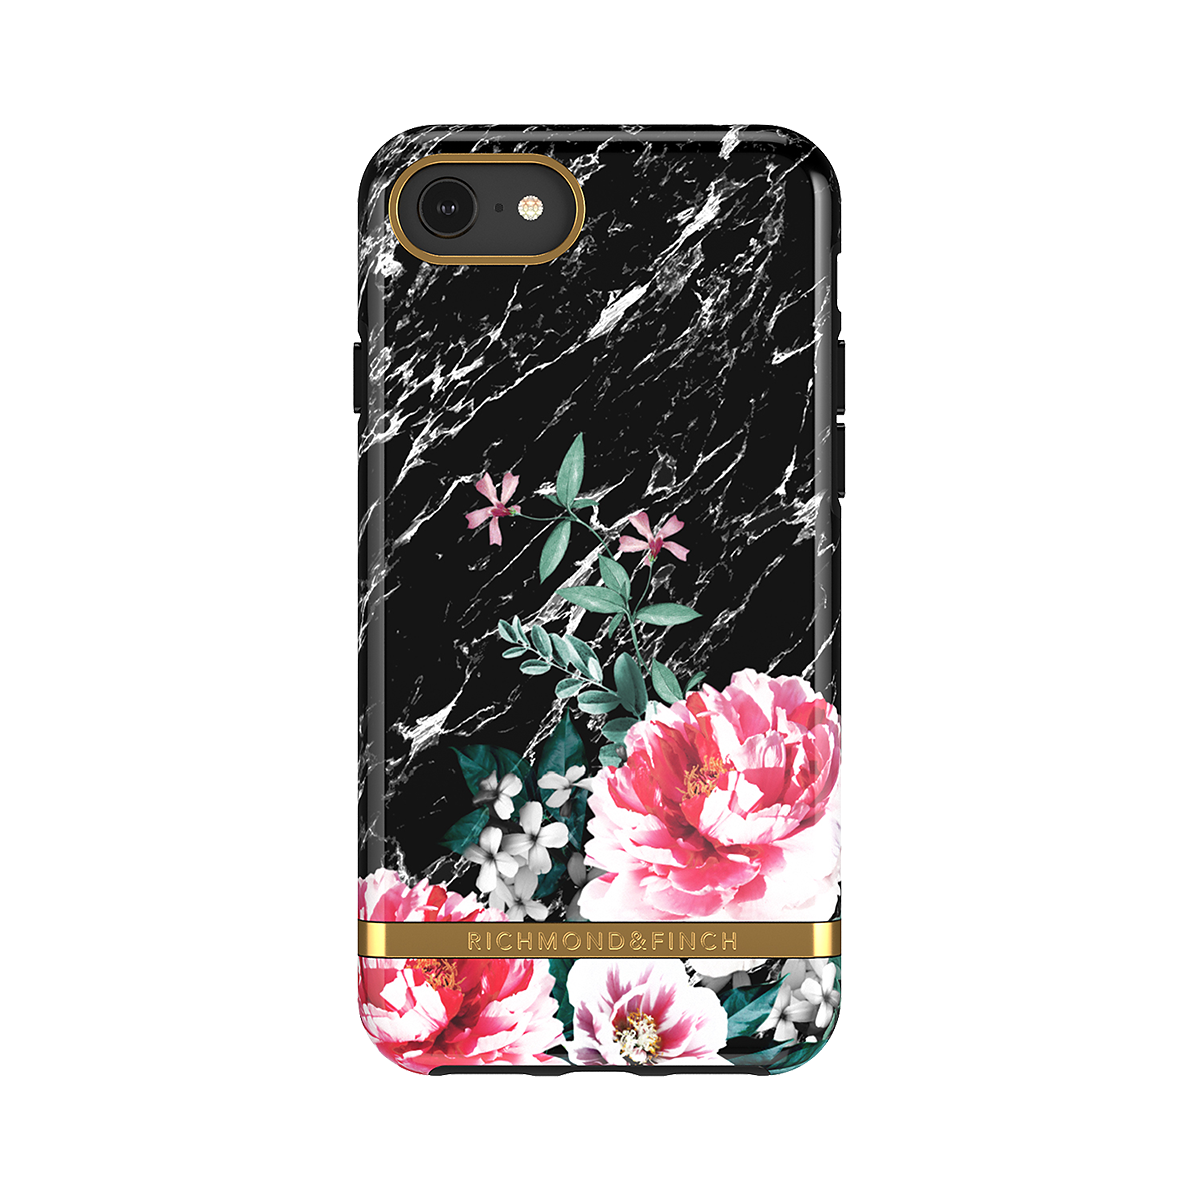 Richmond & Finch, Black Marble Floral, skal för iPhone 6/6s/7/8